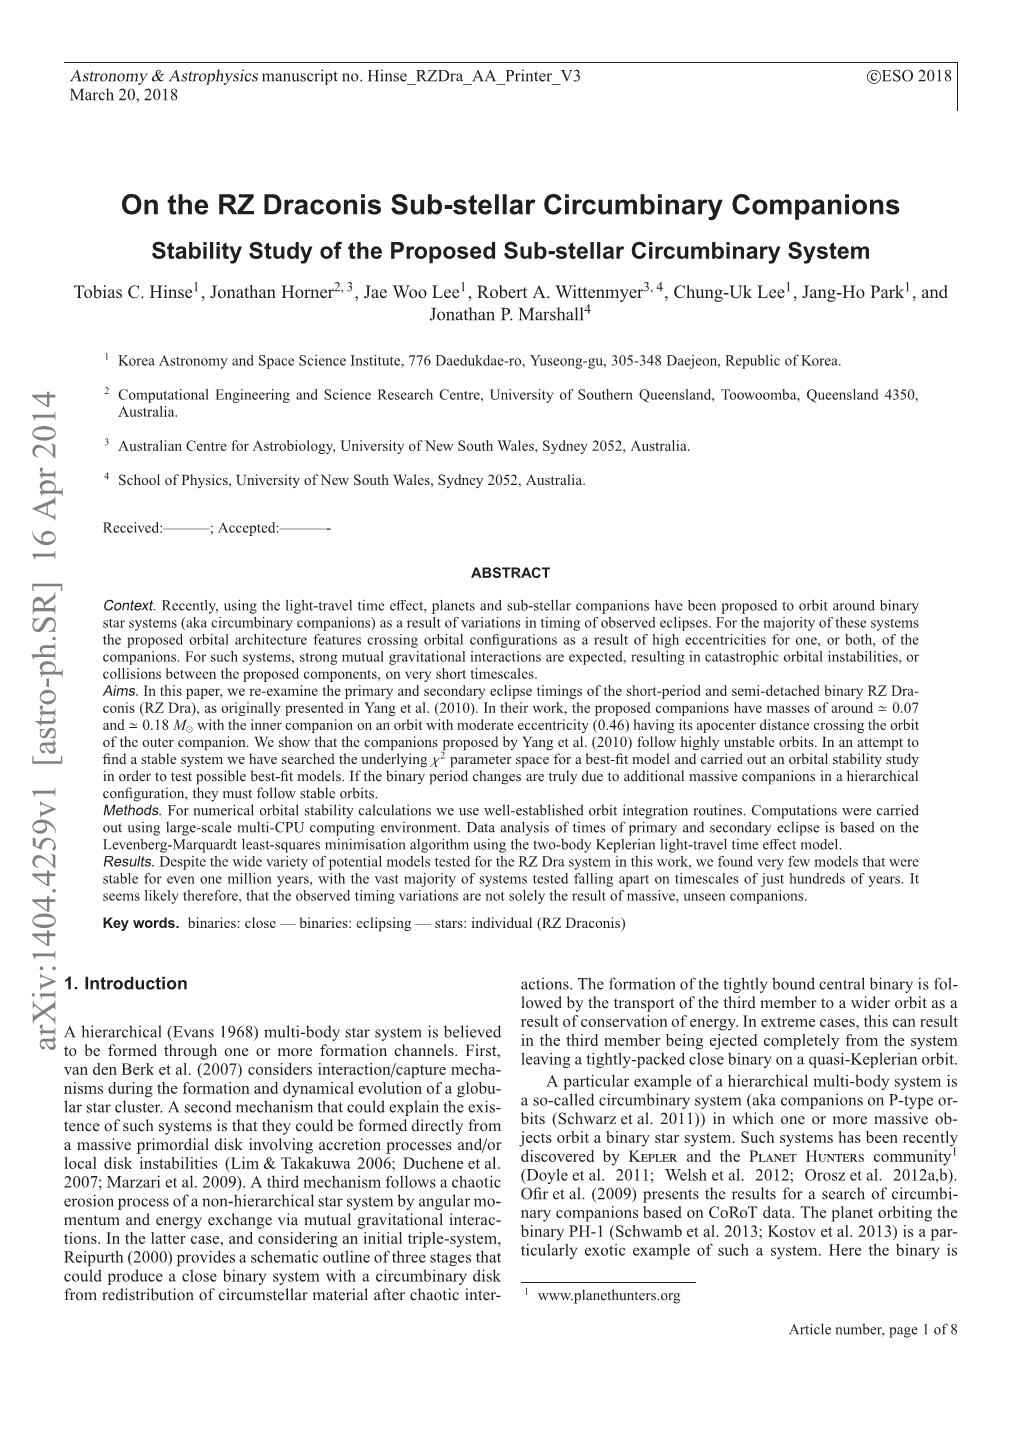 On the RZ Draconis Sub-Stellar Circumbinary Companions Stability